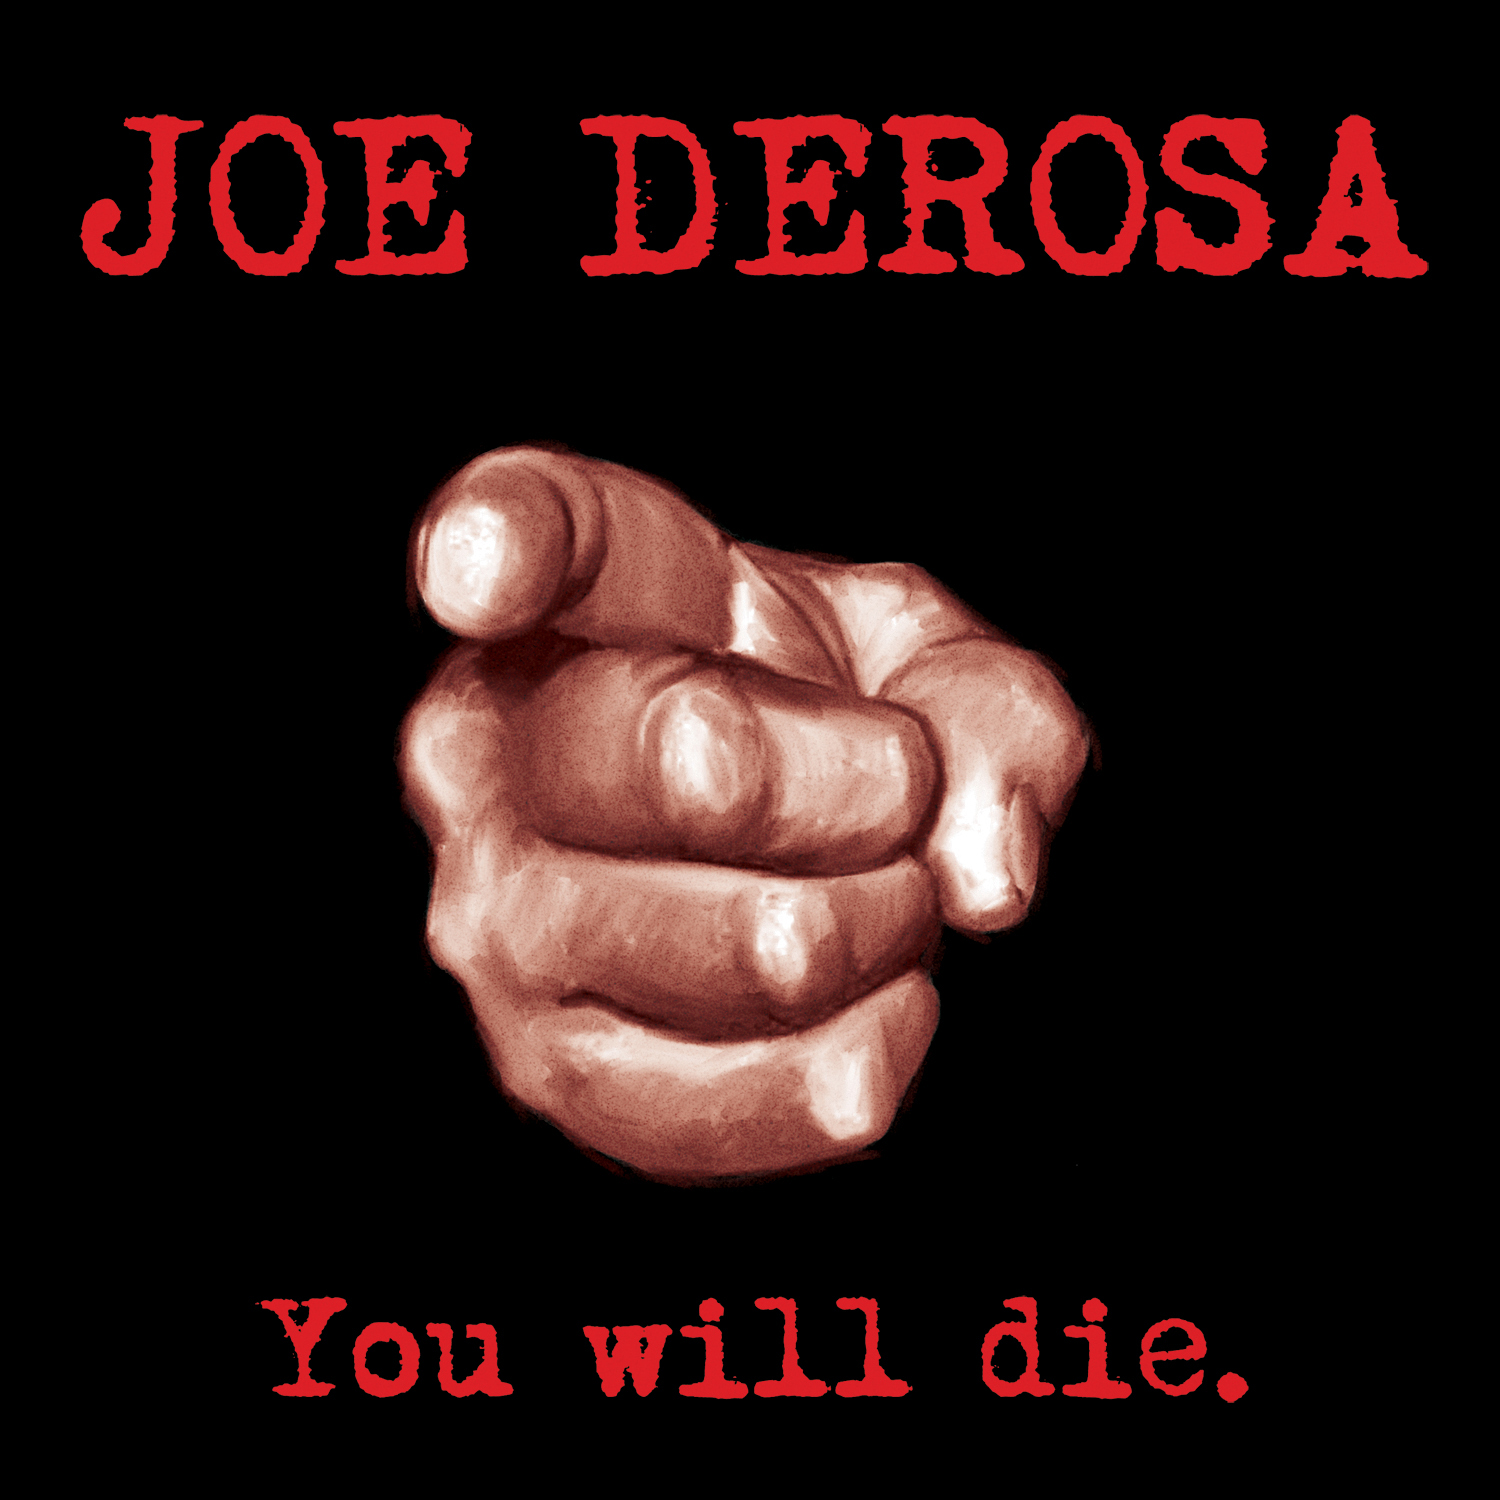 Joe Derosa You Will Die Mvd Entertainment Group B2b